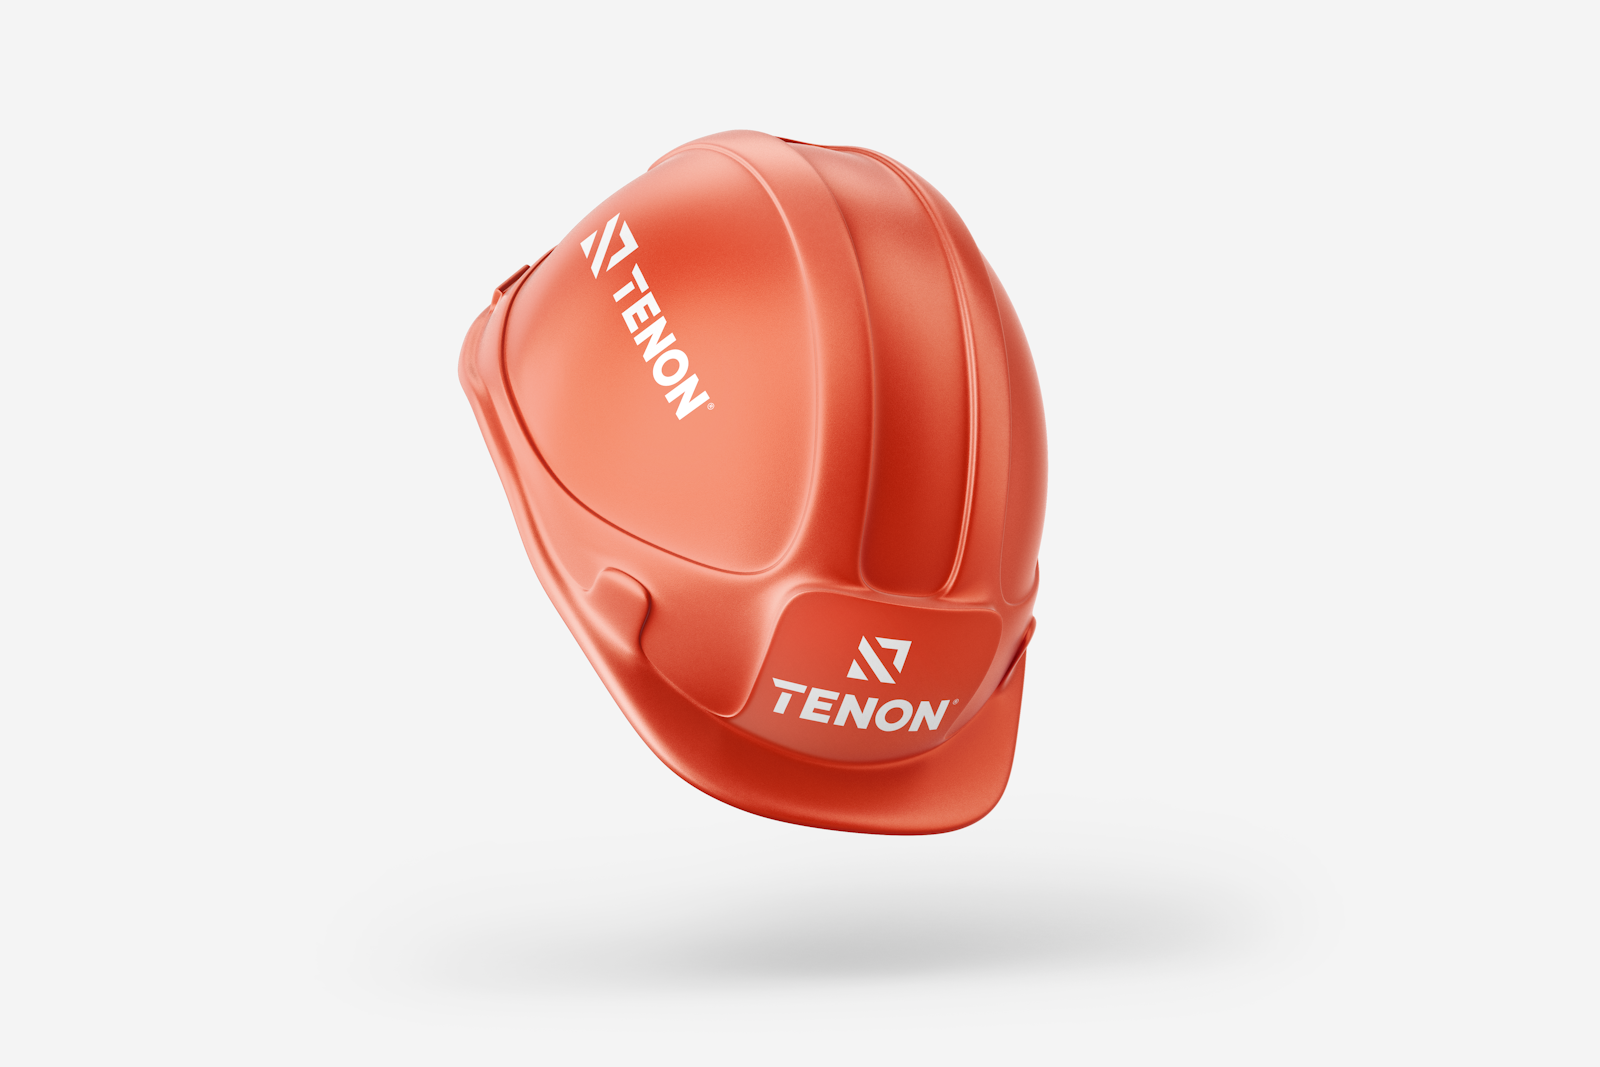 Tenon logo and branding printed on hard hat.